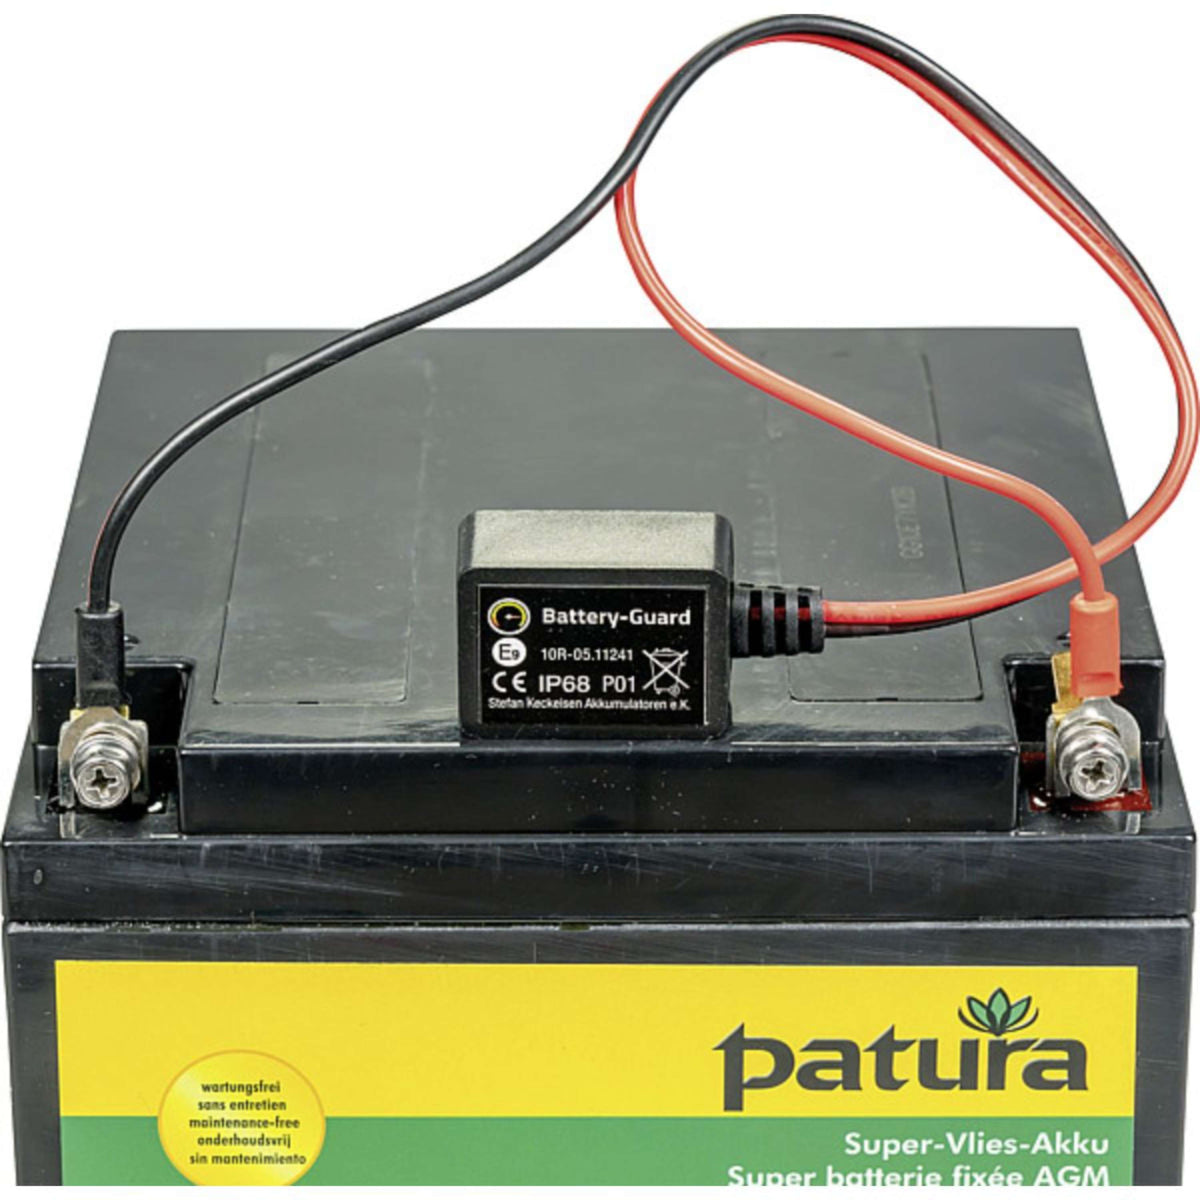 Patura Battery-Guard Batteriecheck per Smartphone